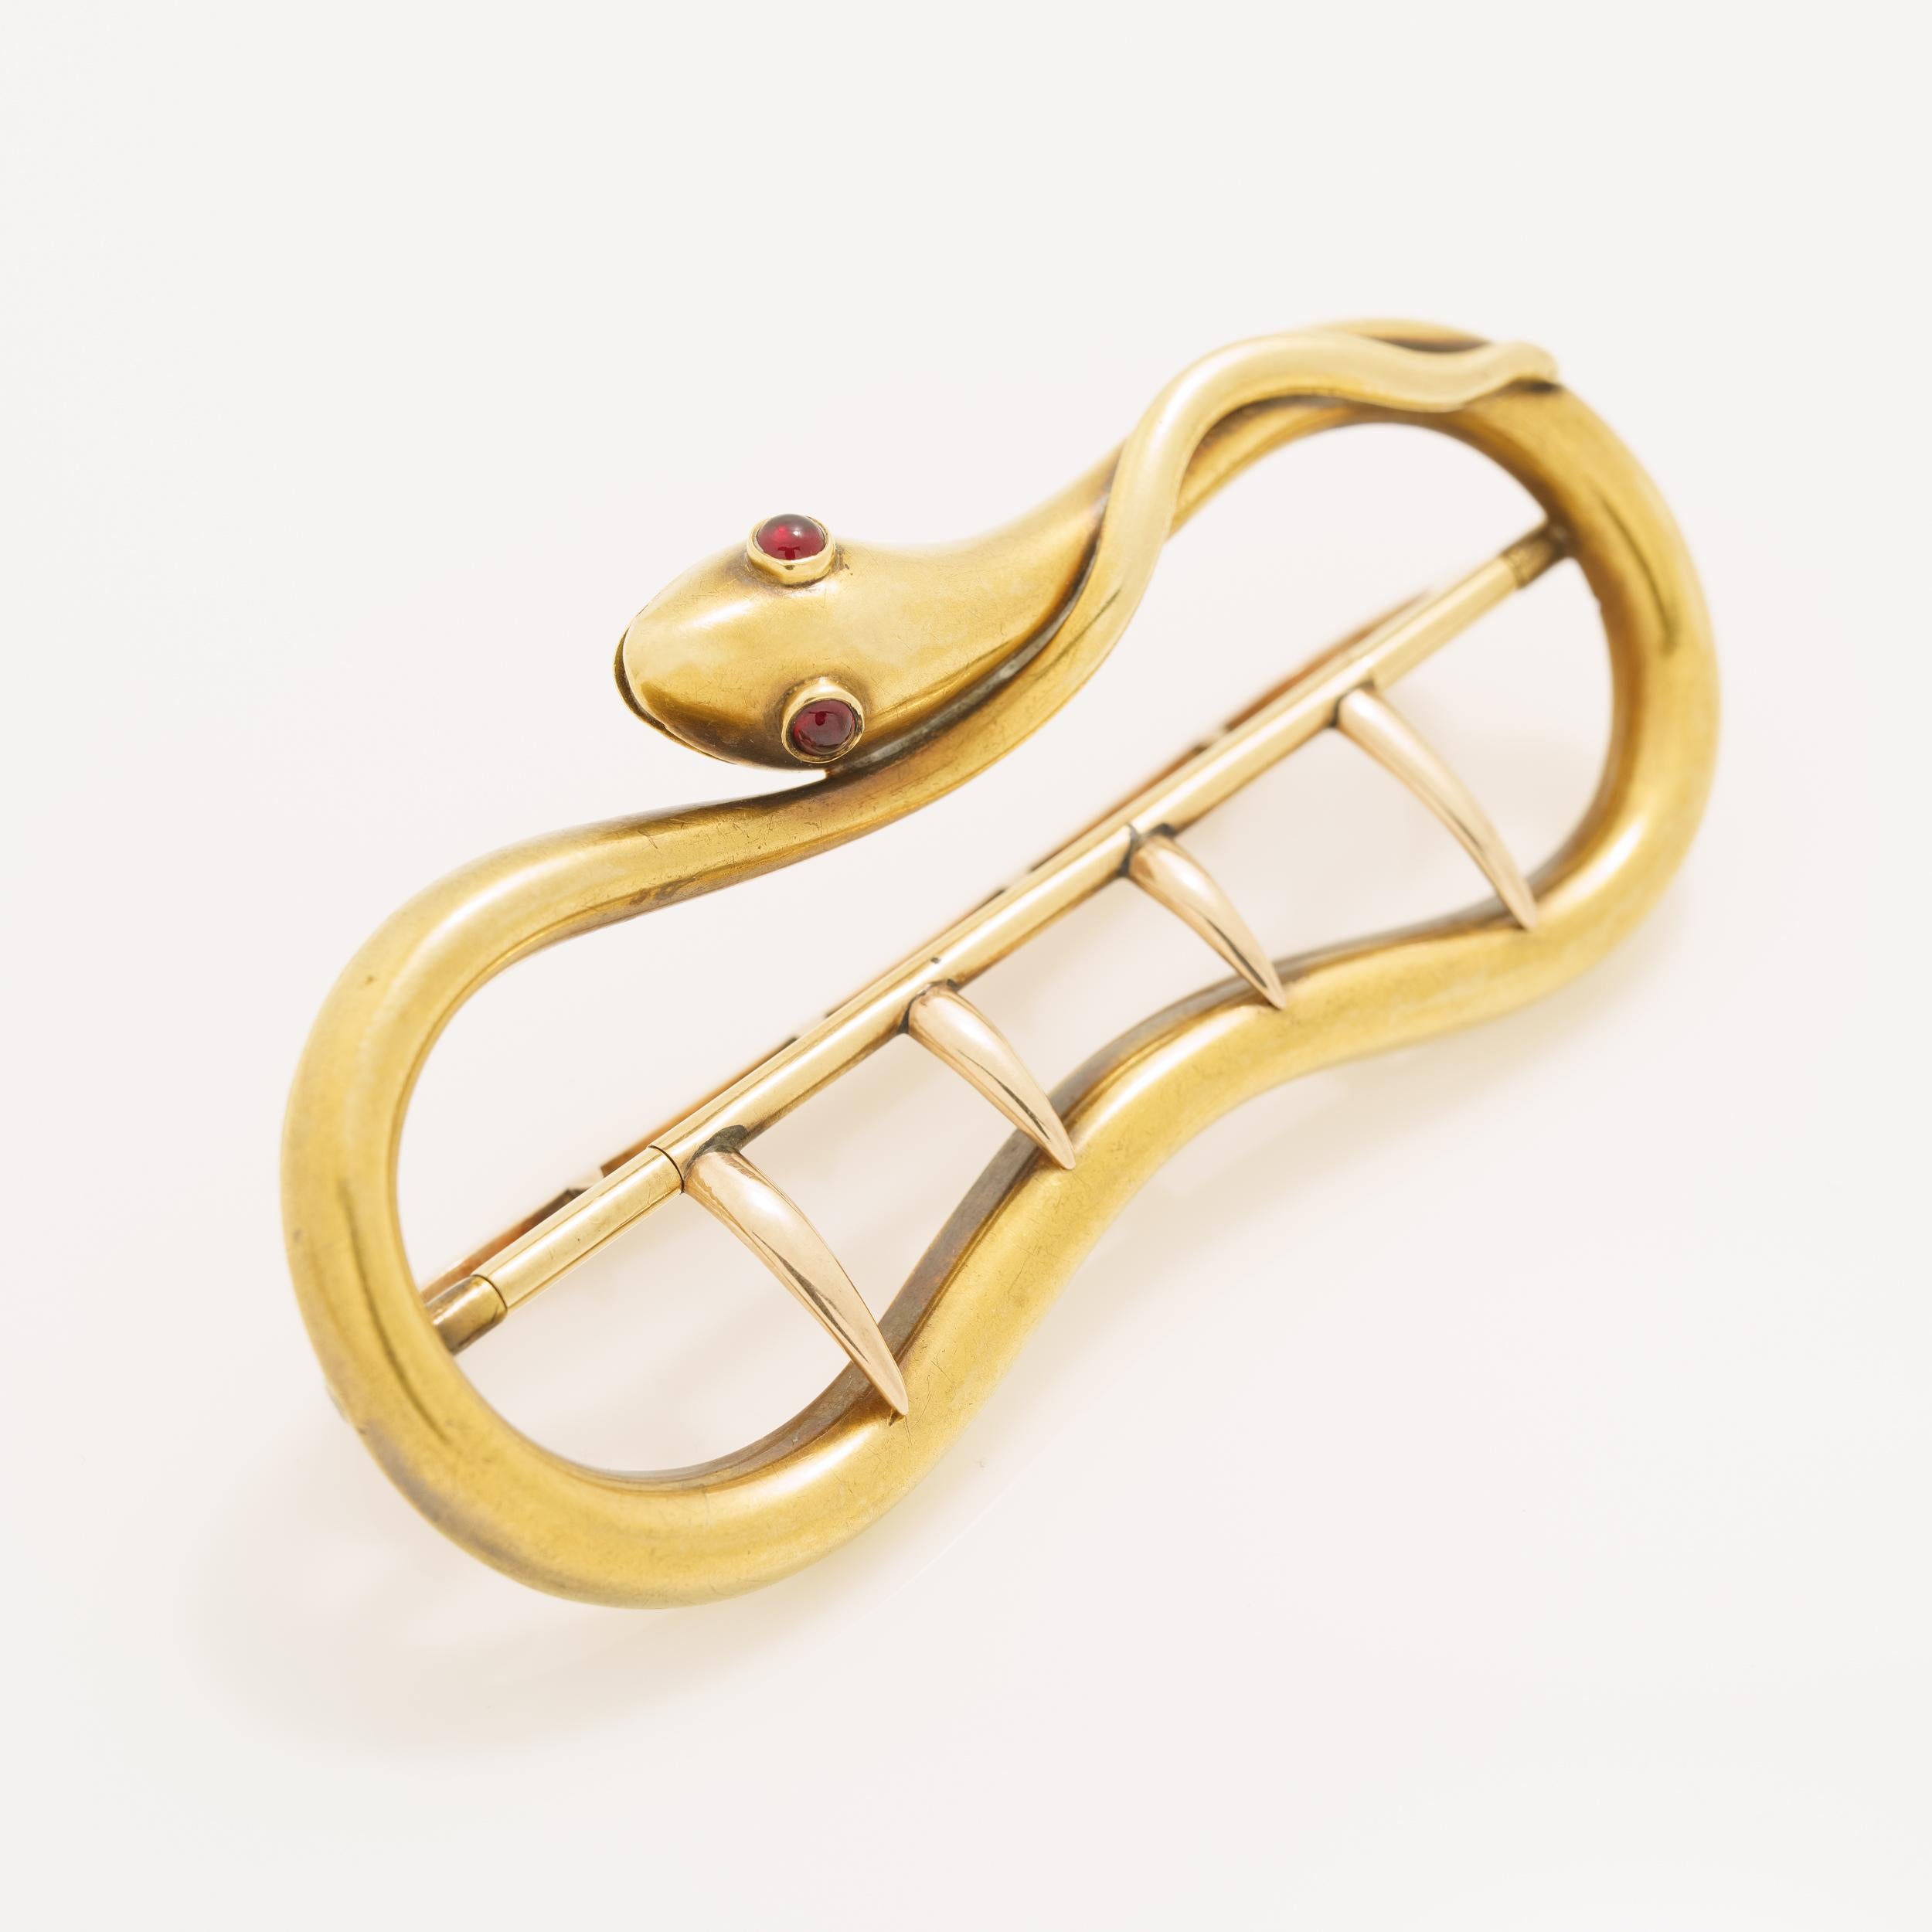 Belle Époque Antique French 18 Karat Yellow Gold Serpent Snake Belt Buckle Cabochon Rubies For Sale